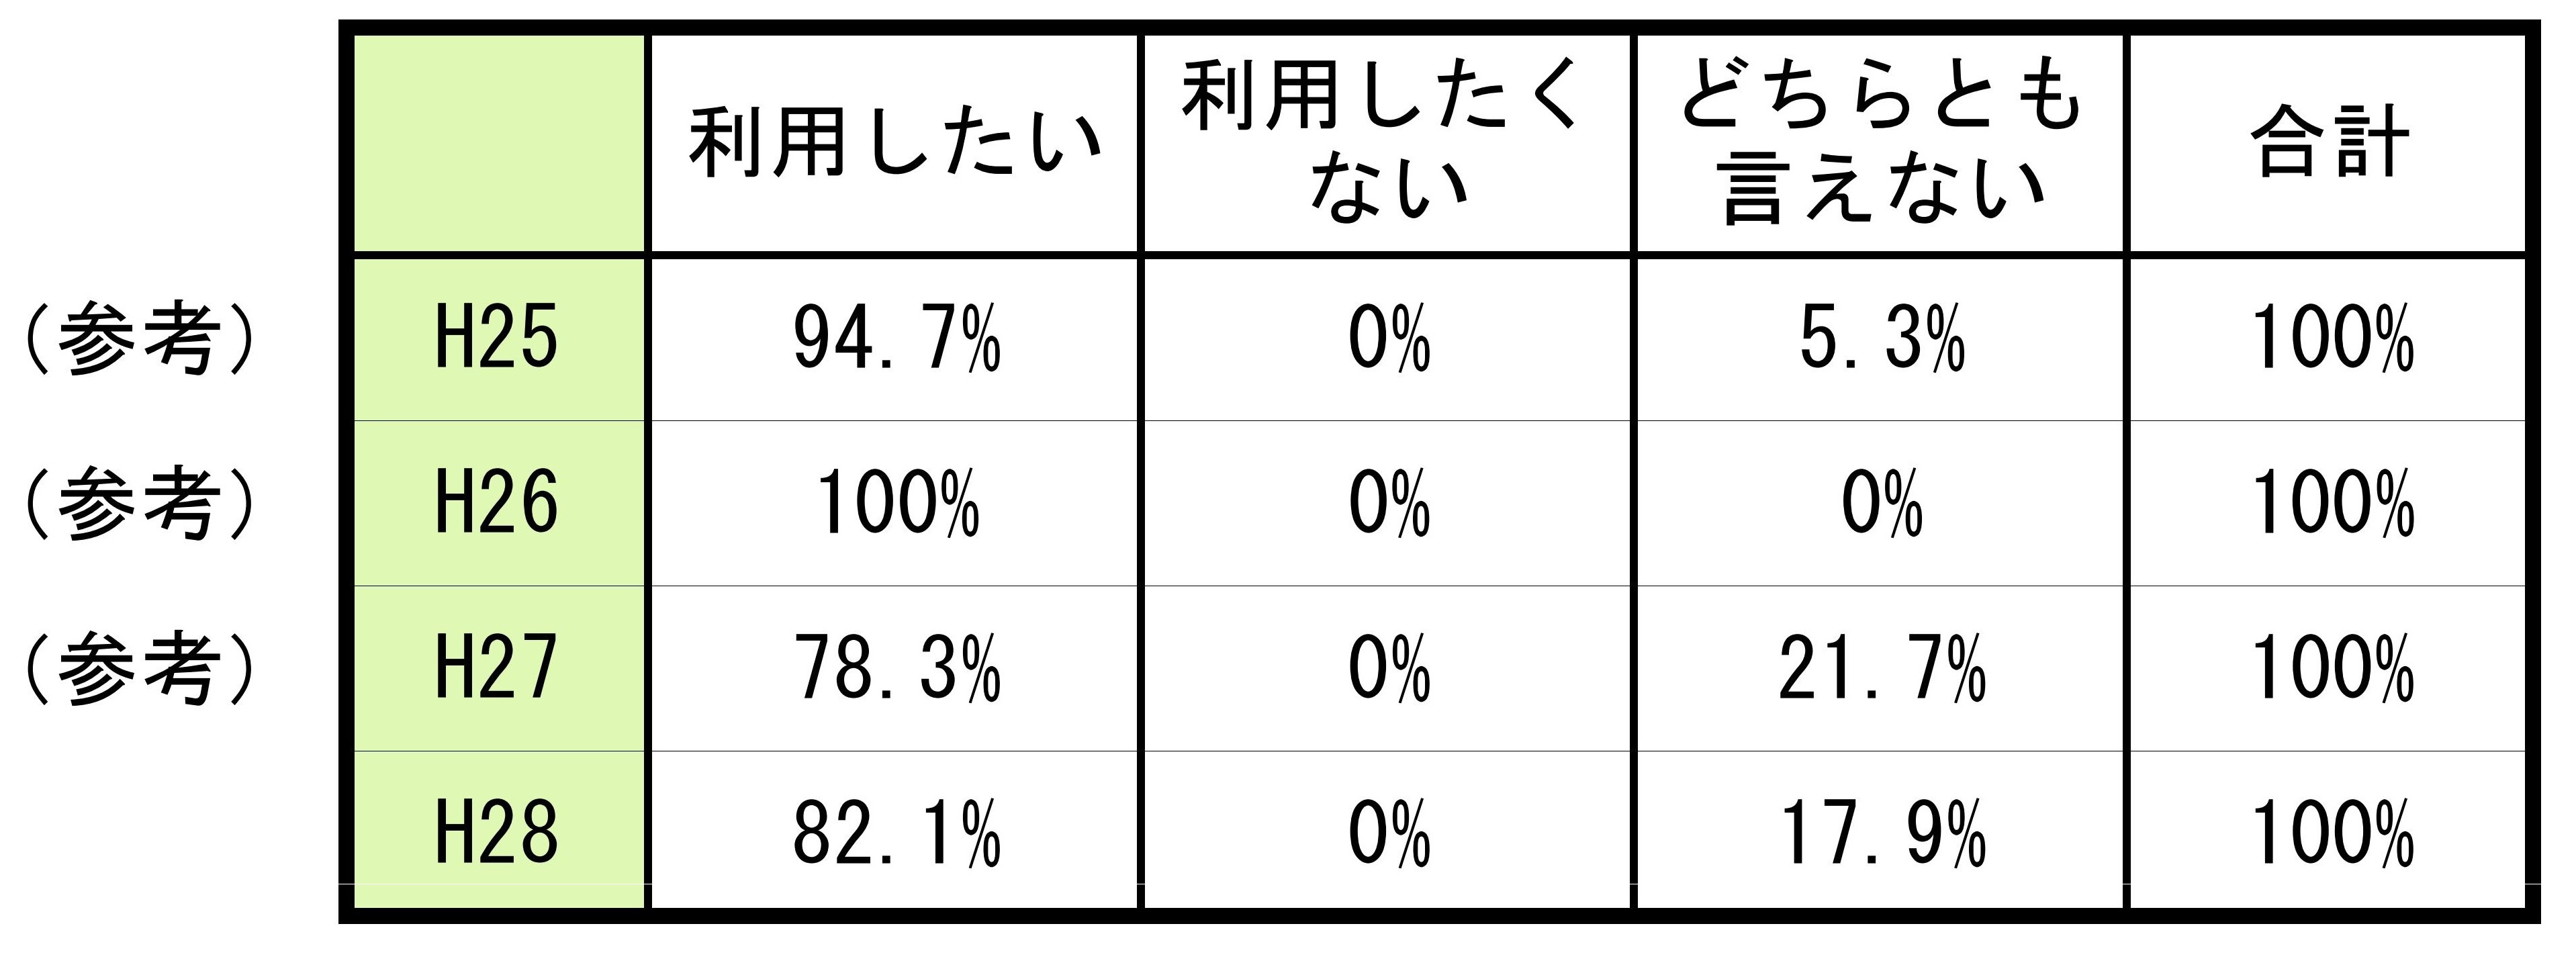 http://www.iwate-pu.ac.jp/contribution/%E3%80%90%E5%9C%B0%E6%94%BF%E7%A0%94%E3%80%91%E3%82%A2%E3%83%B3%E3%82%B1%E3%83%BC%E3%83%88%E3%83%BB%E8%A8%AD%E5%95%8F%EF%BC%95%E8%A1%A8.jpg